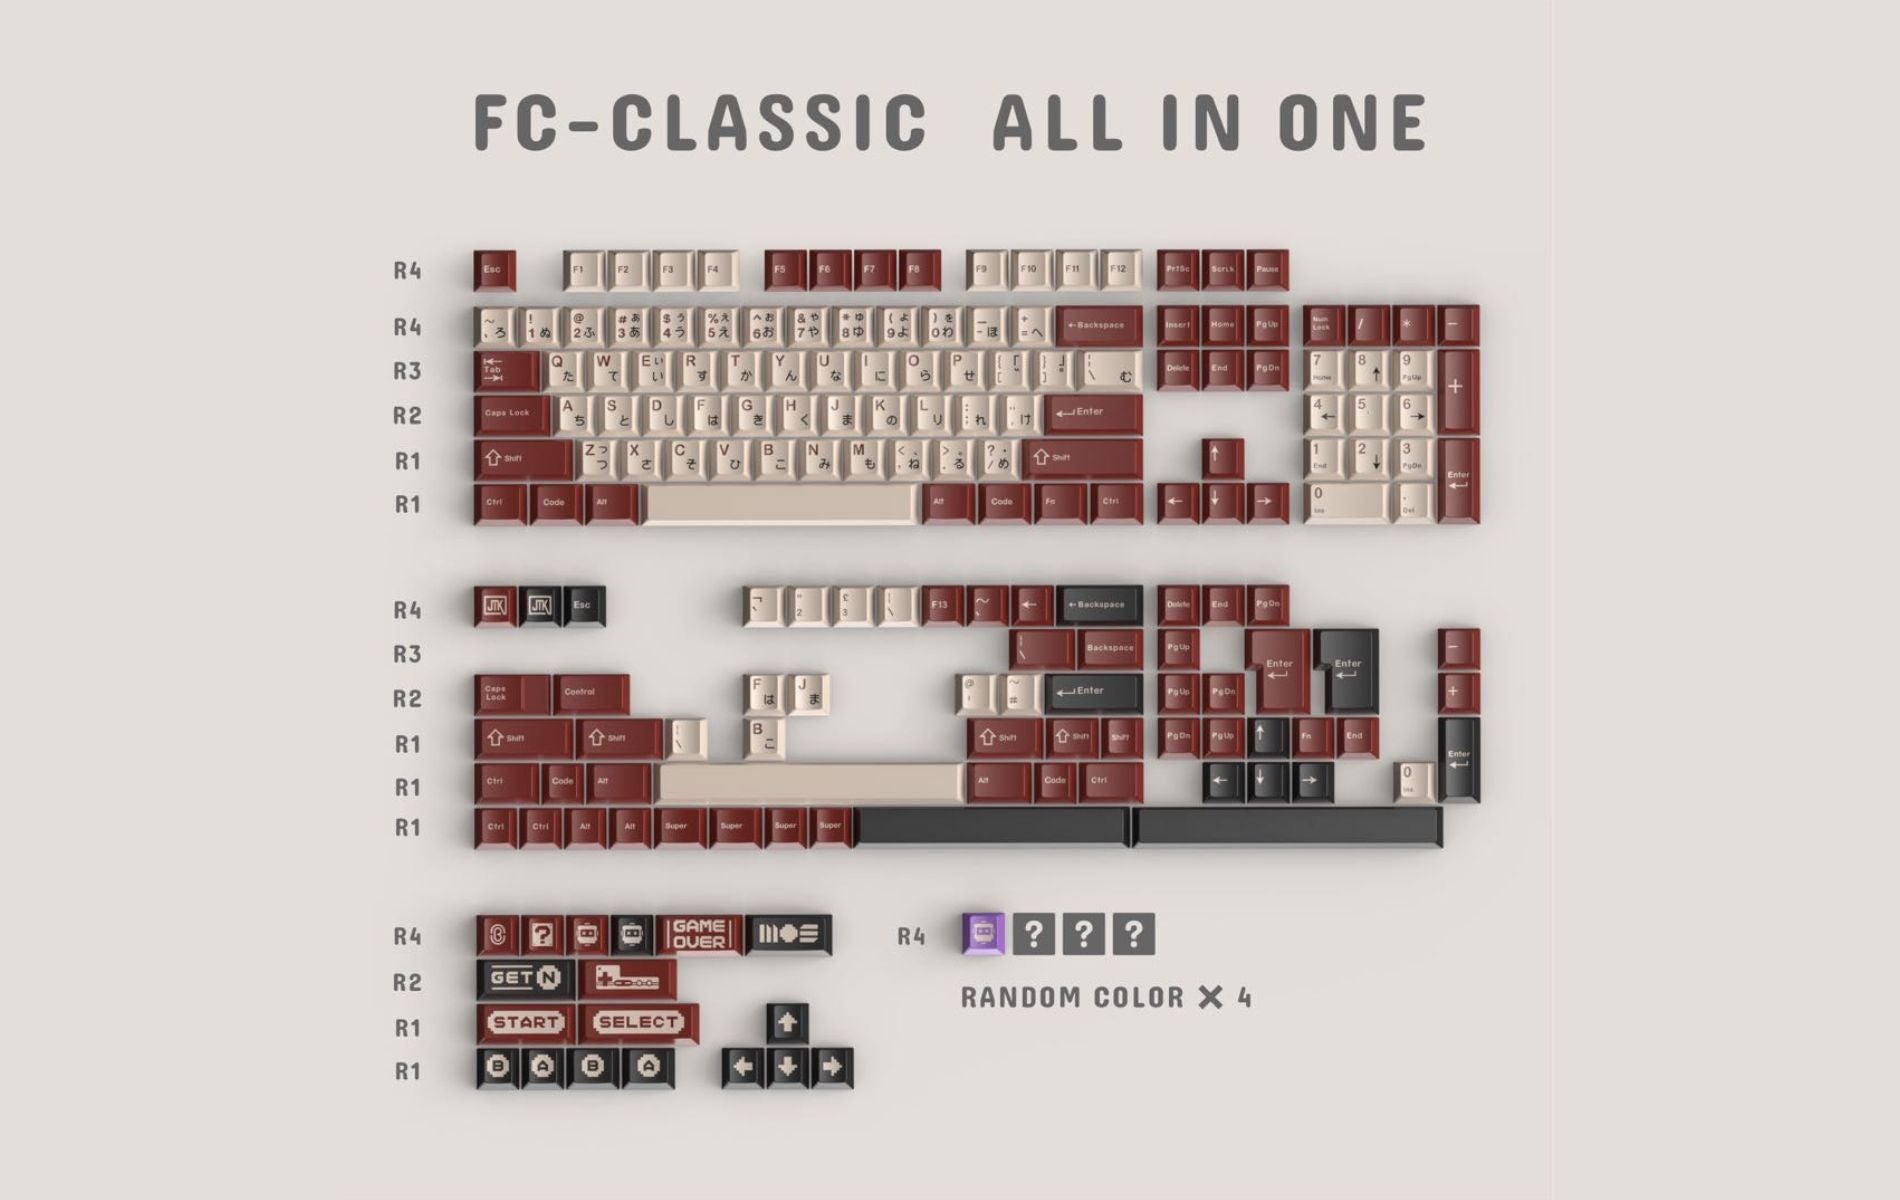 JTK Classic FC Keycap Set